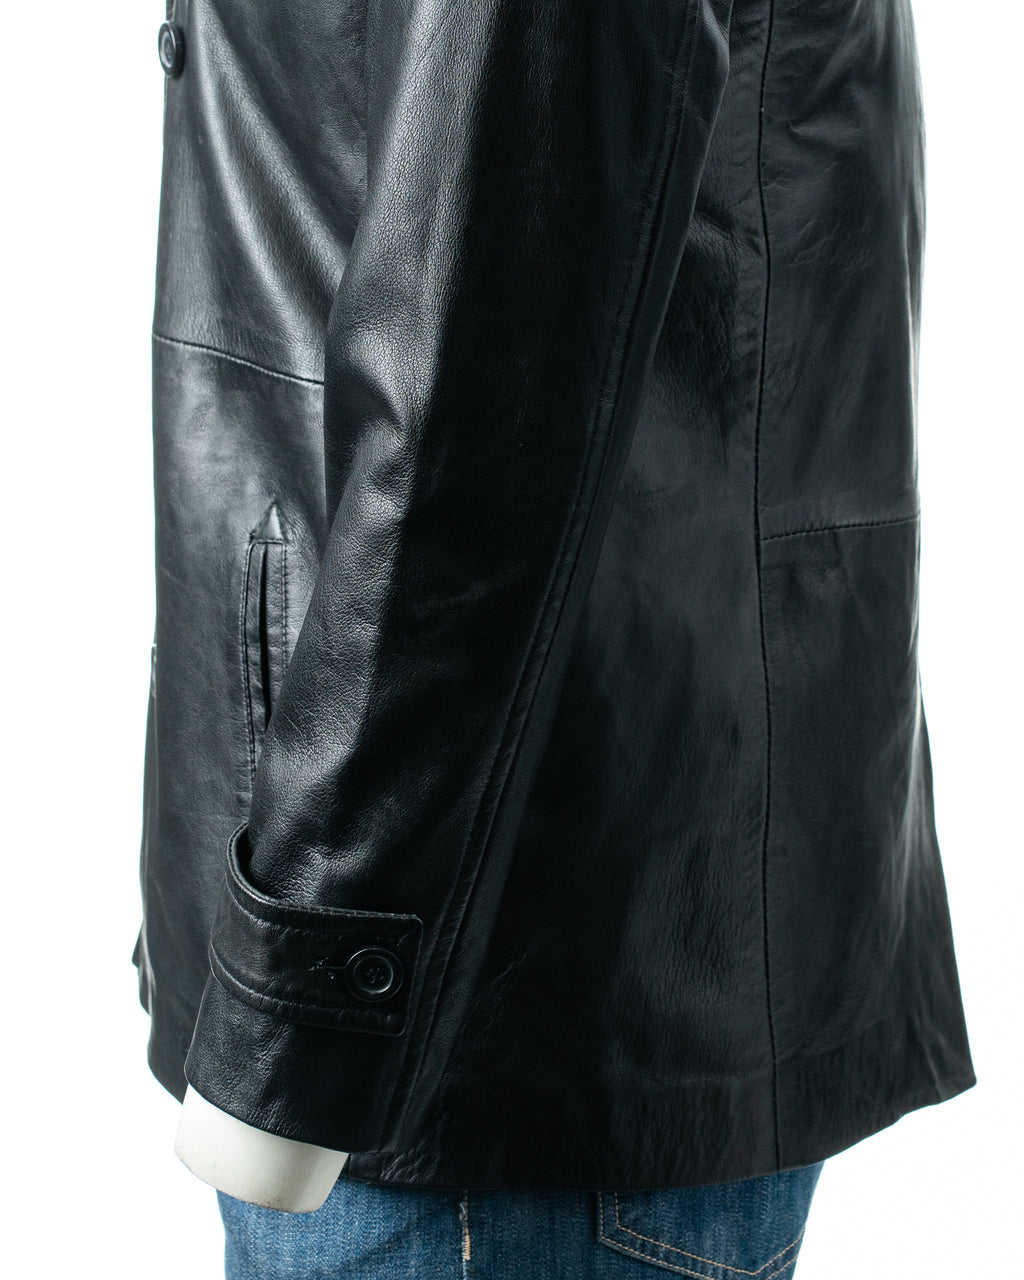 Men's Black Leather Peacoat: Guistino